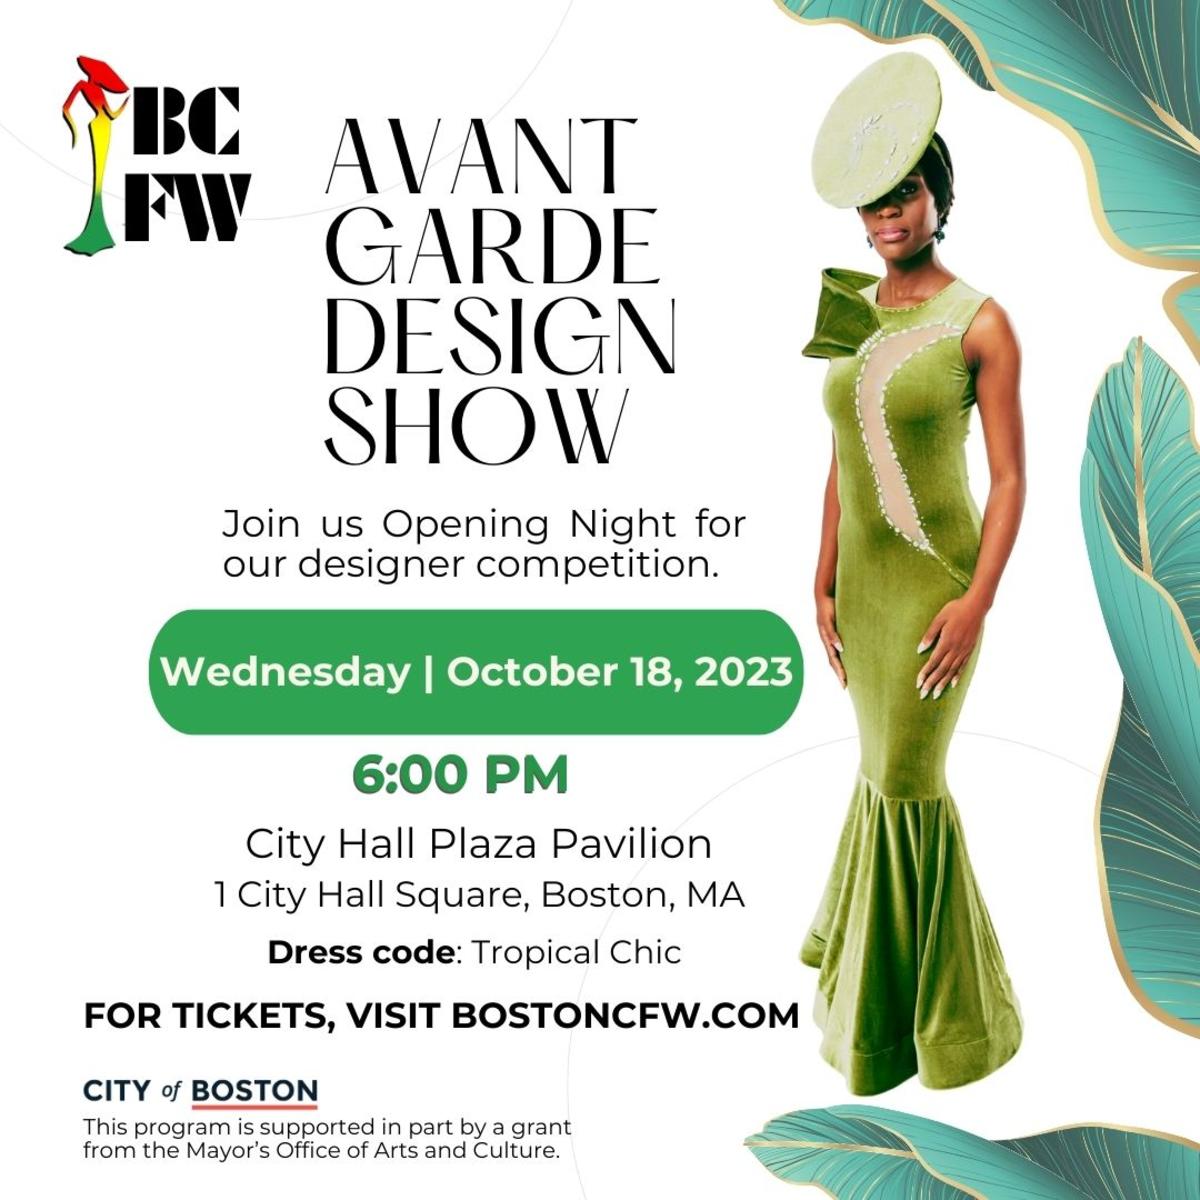 Graphic for Boston Caribbean Fashion Week Avant Garde Design Show